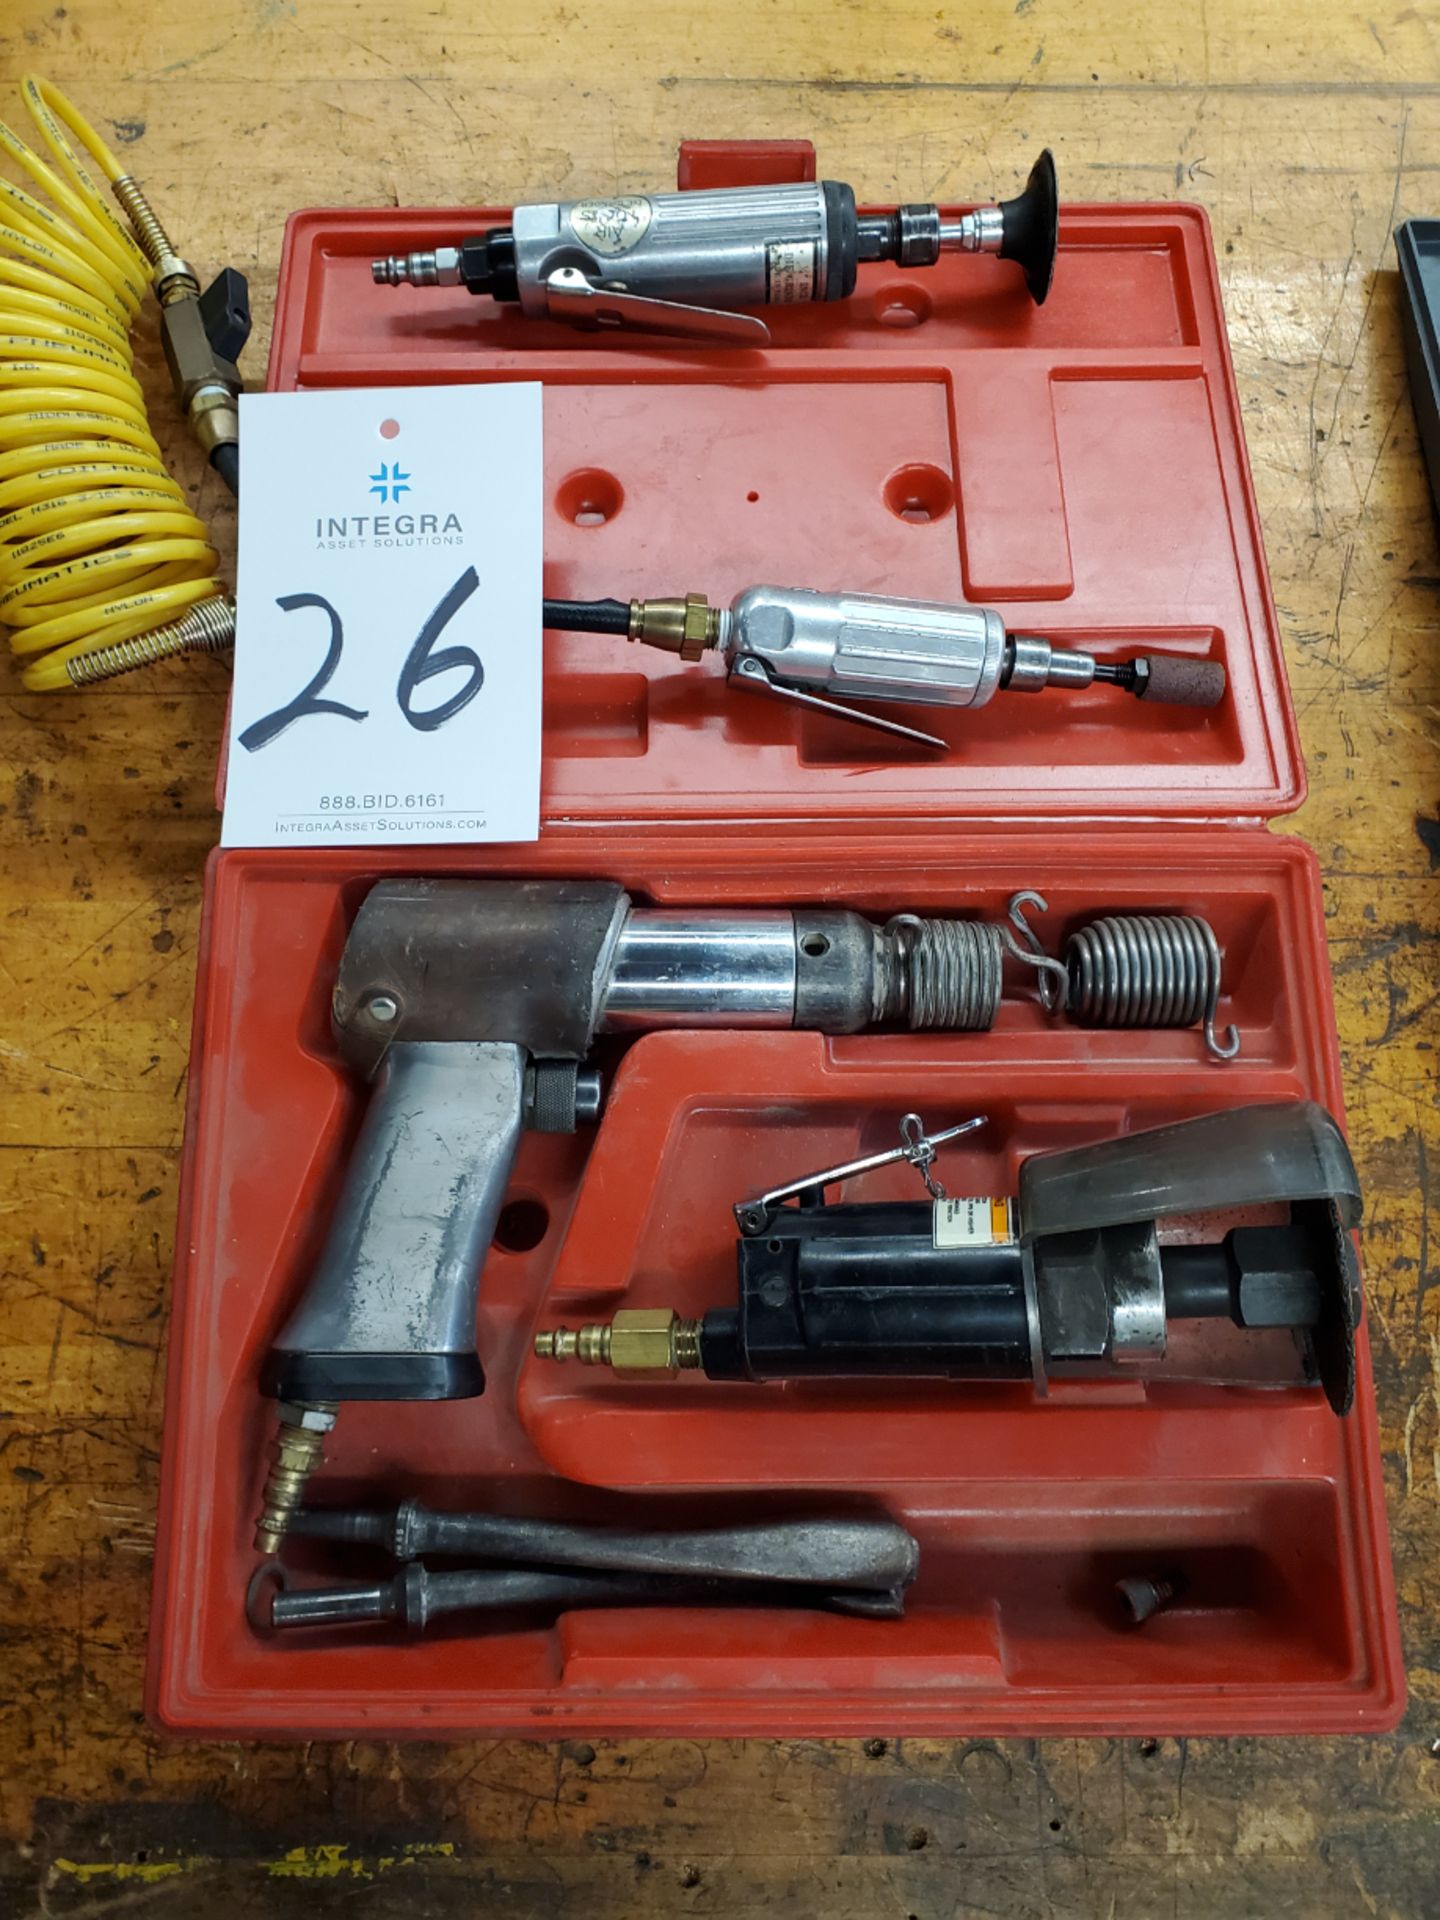 (4) Assorted Pneumatic Tools